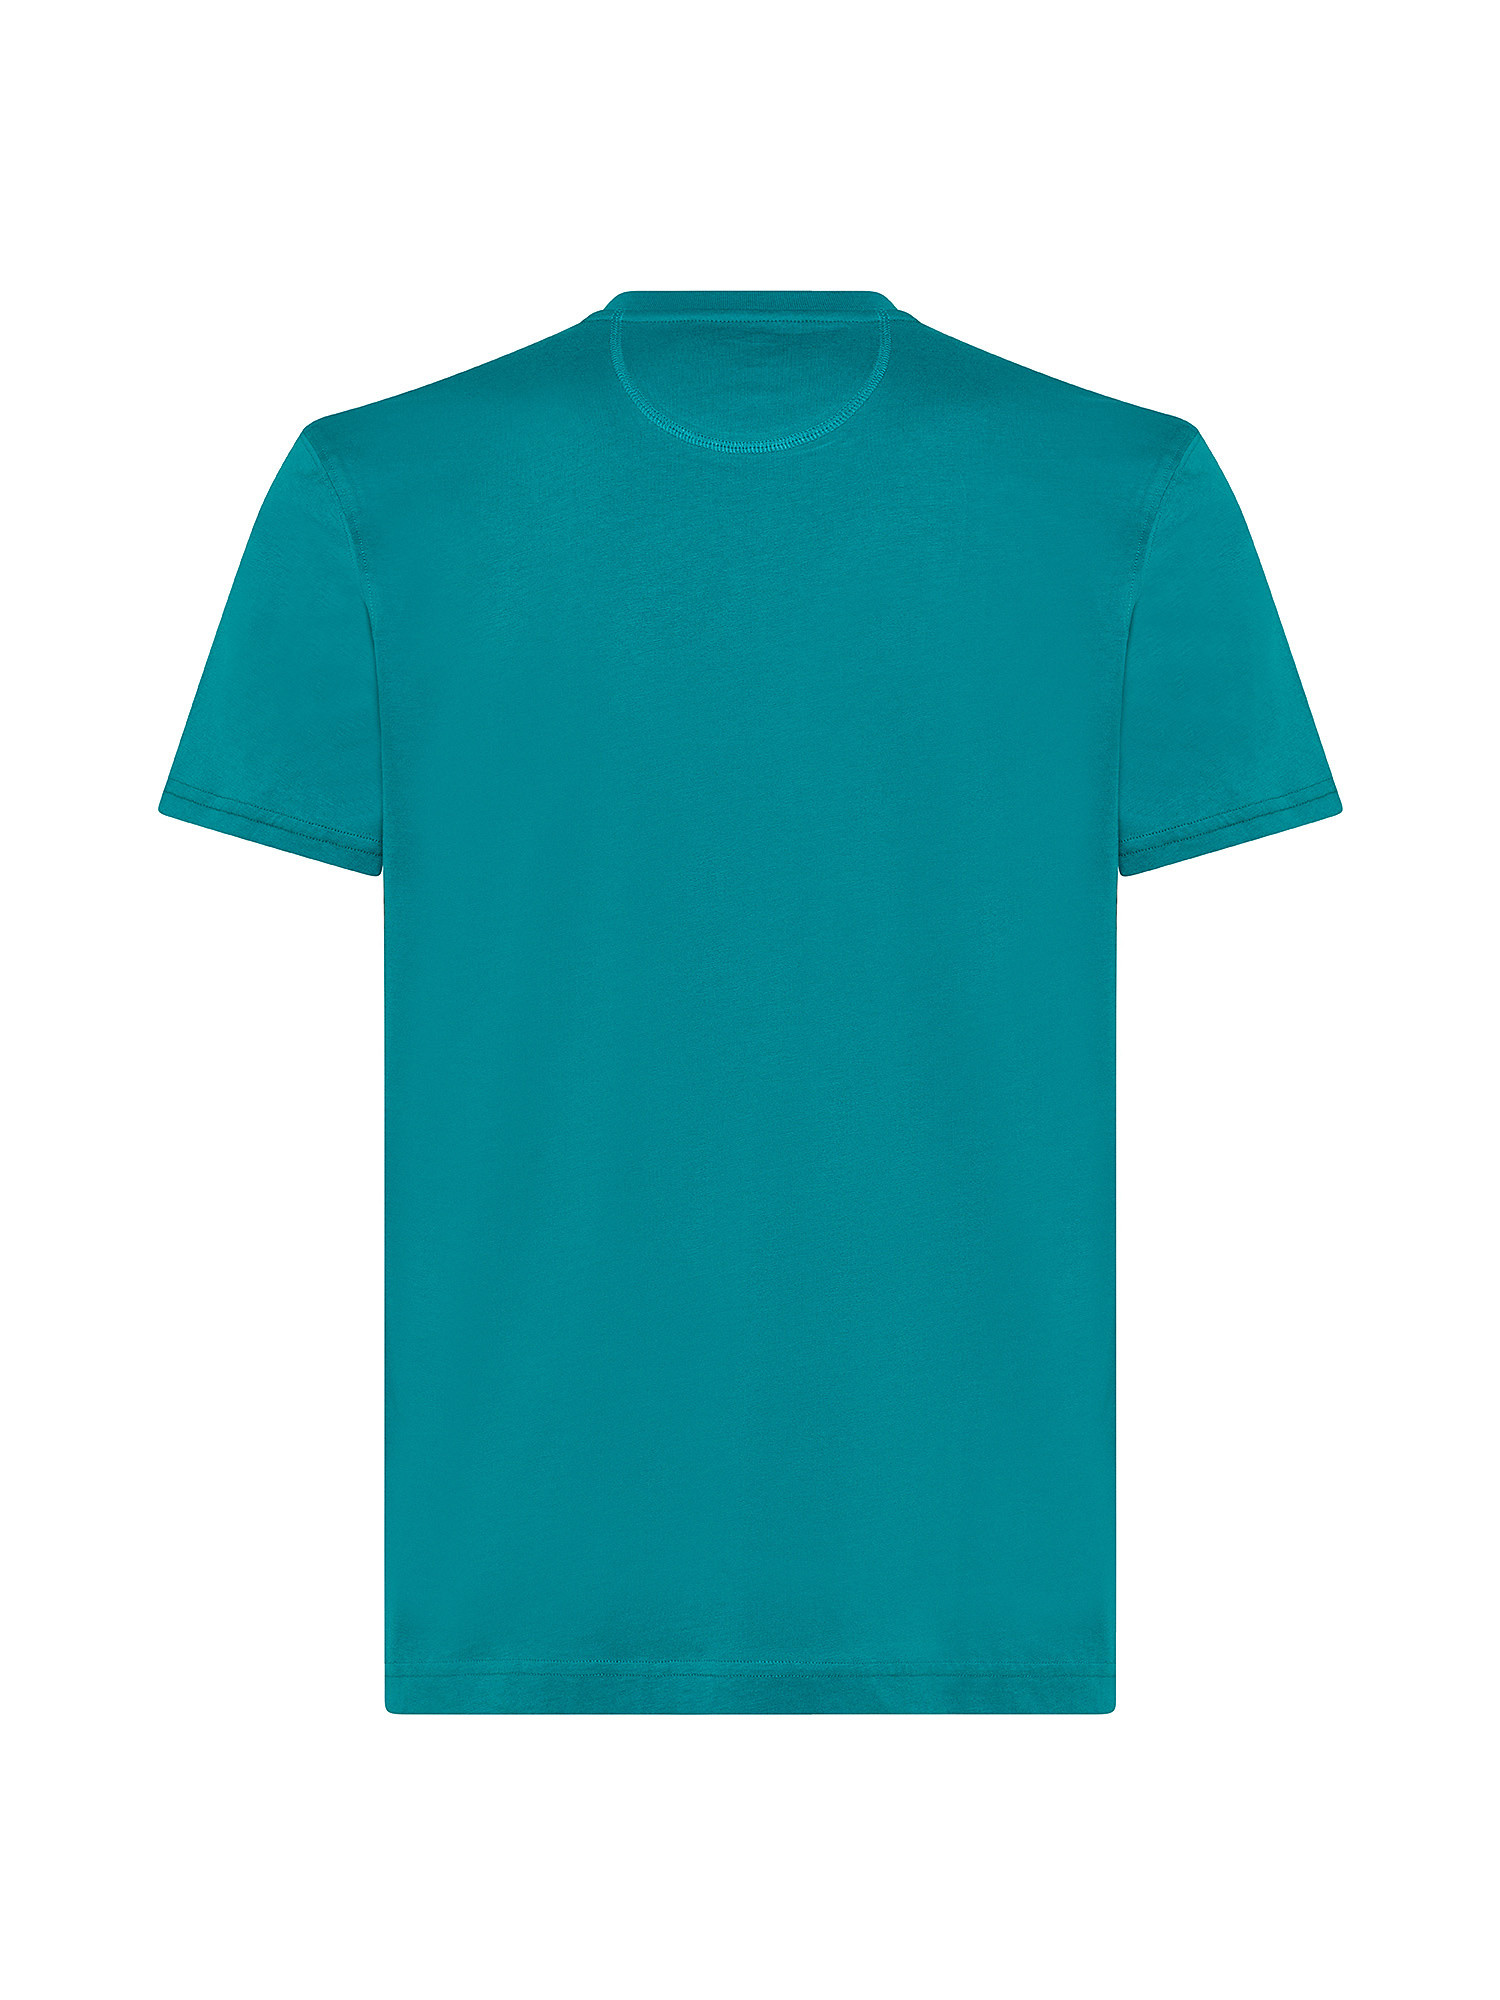 La Martina - T-shirt maniche corte in cotone jersey, Verde, large image number 1